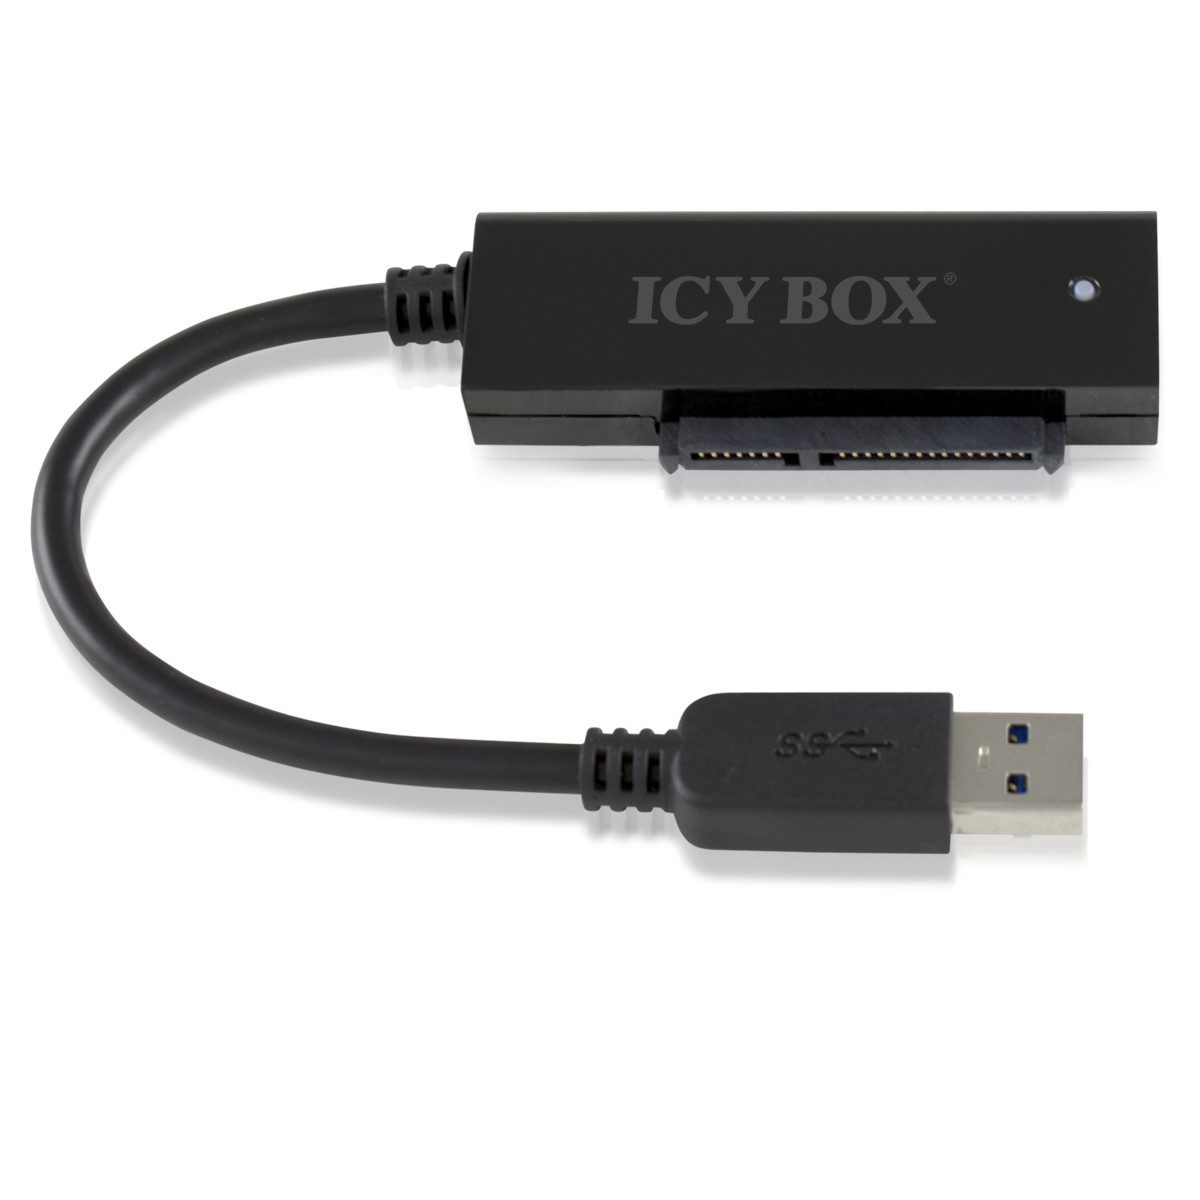 ICY BOX Adaptateur SATA vers USB 3.0